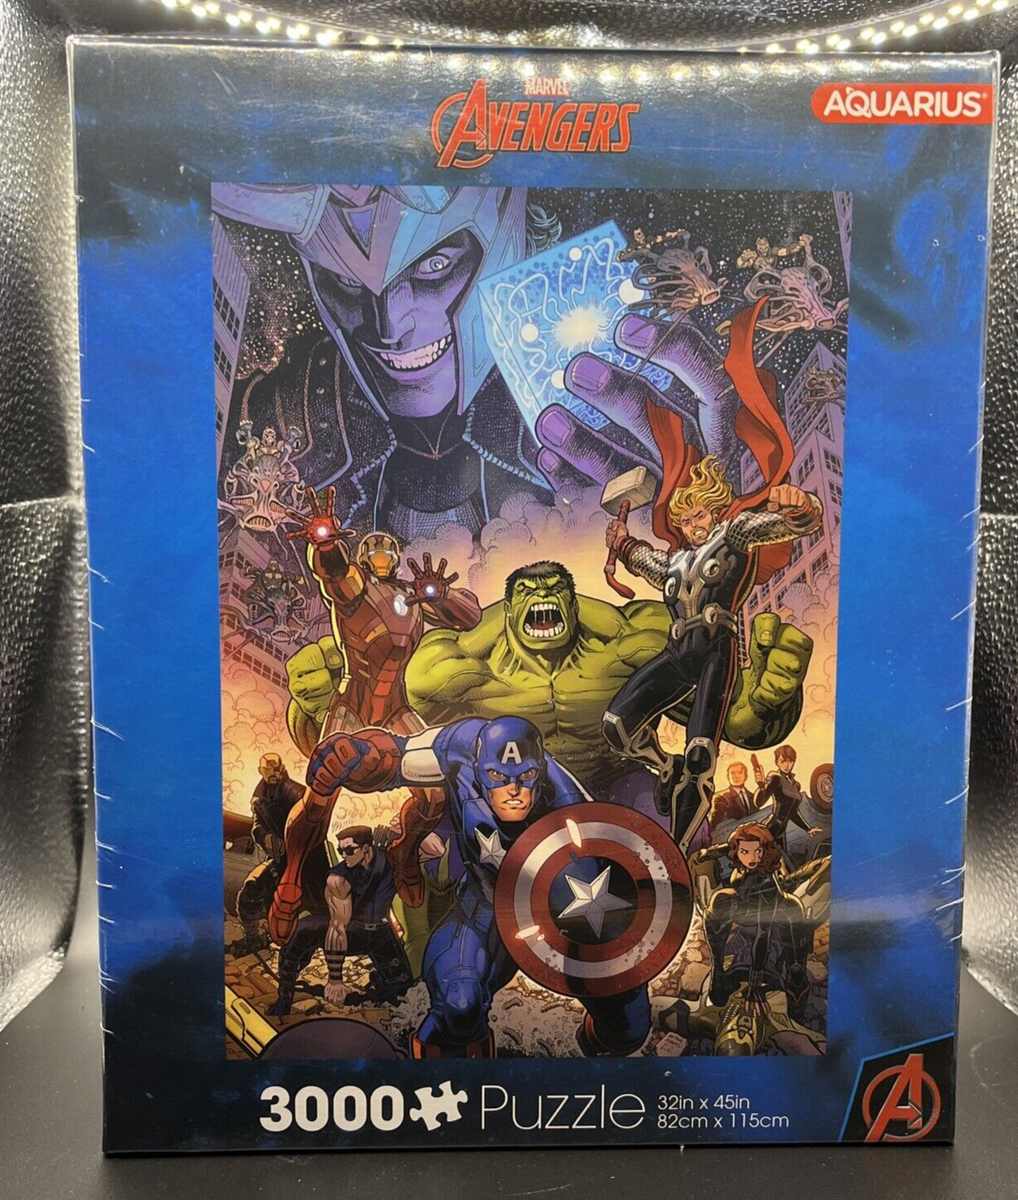 Aquarius Puzzles Marvel The Avengers 5000 Piece Jigsaw Puzzle